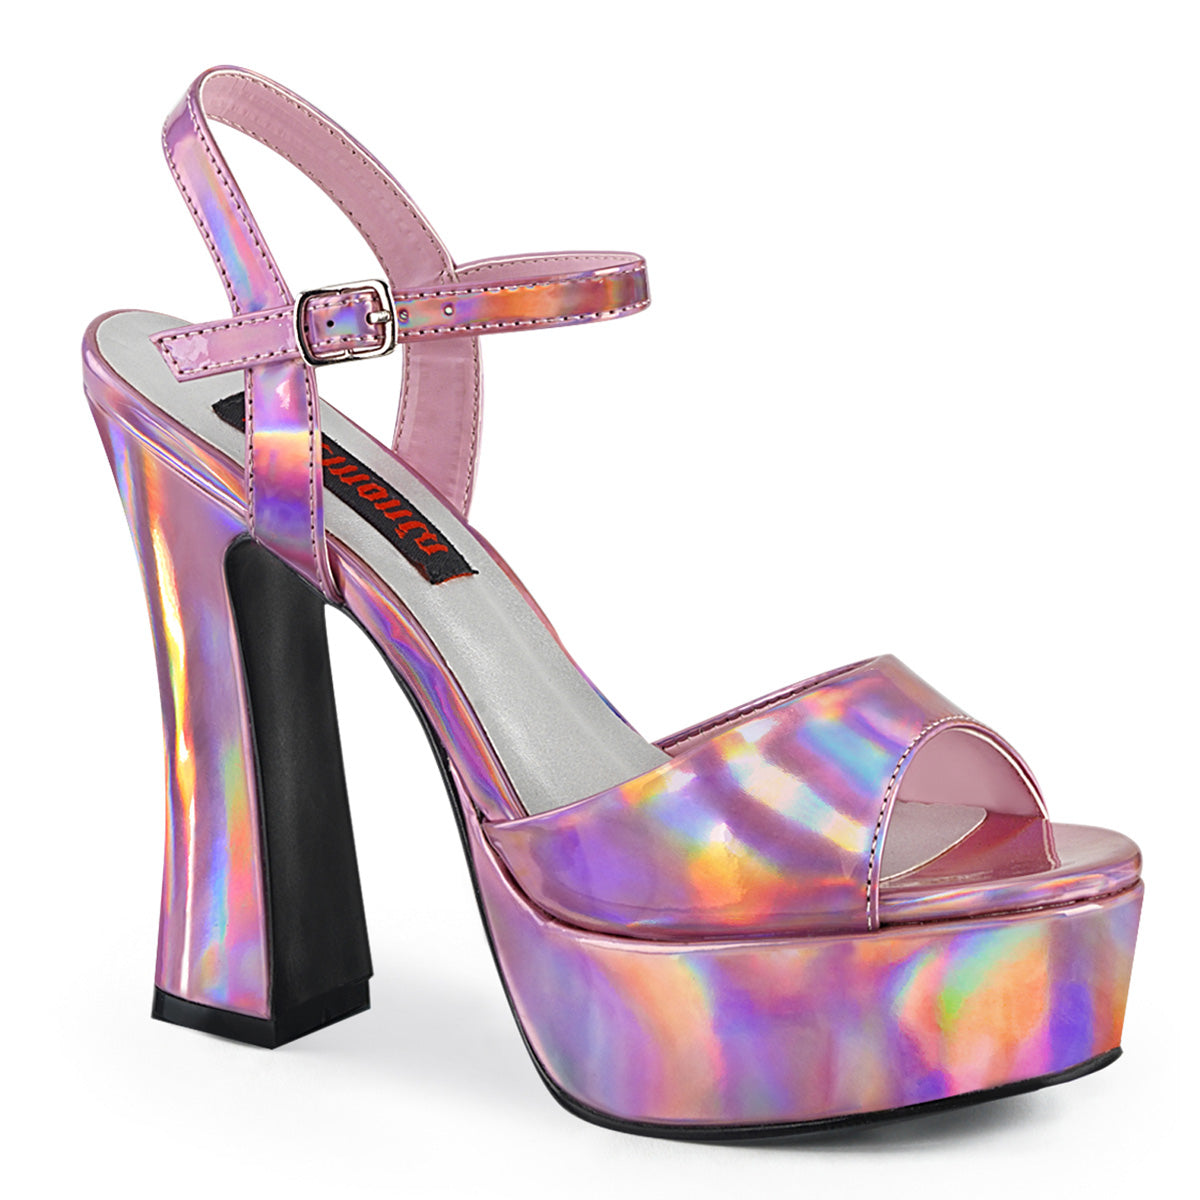 DOLLY-09 Alternative Footwear Demonia Women's Sandals Pink Hologram